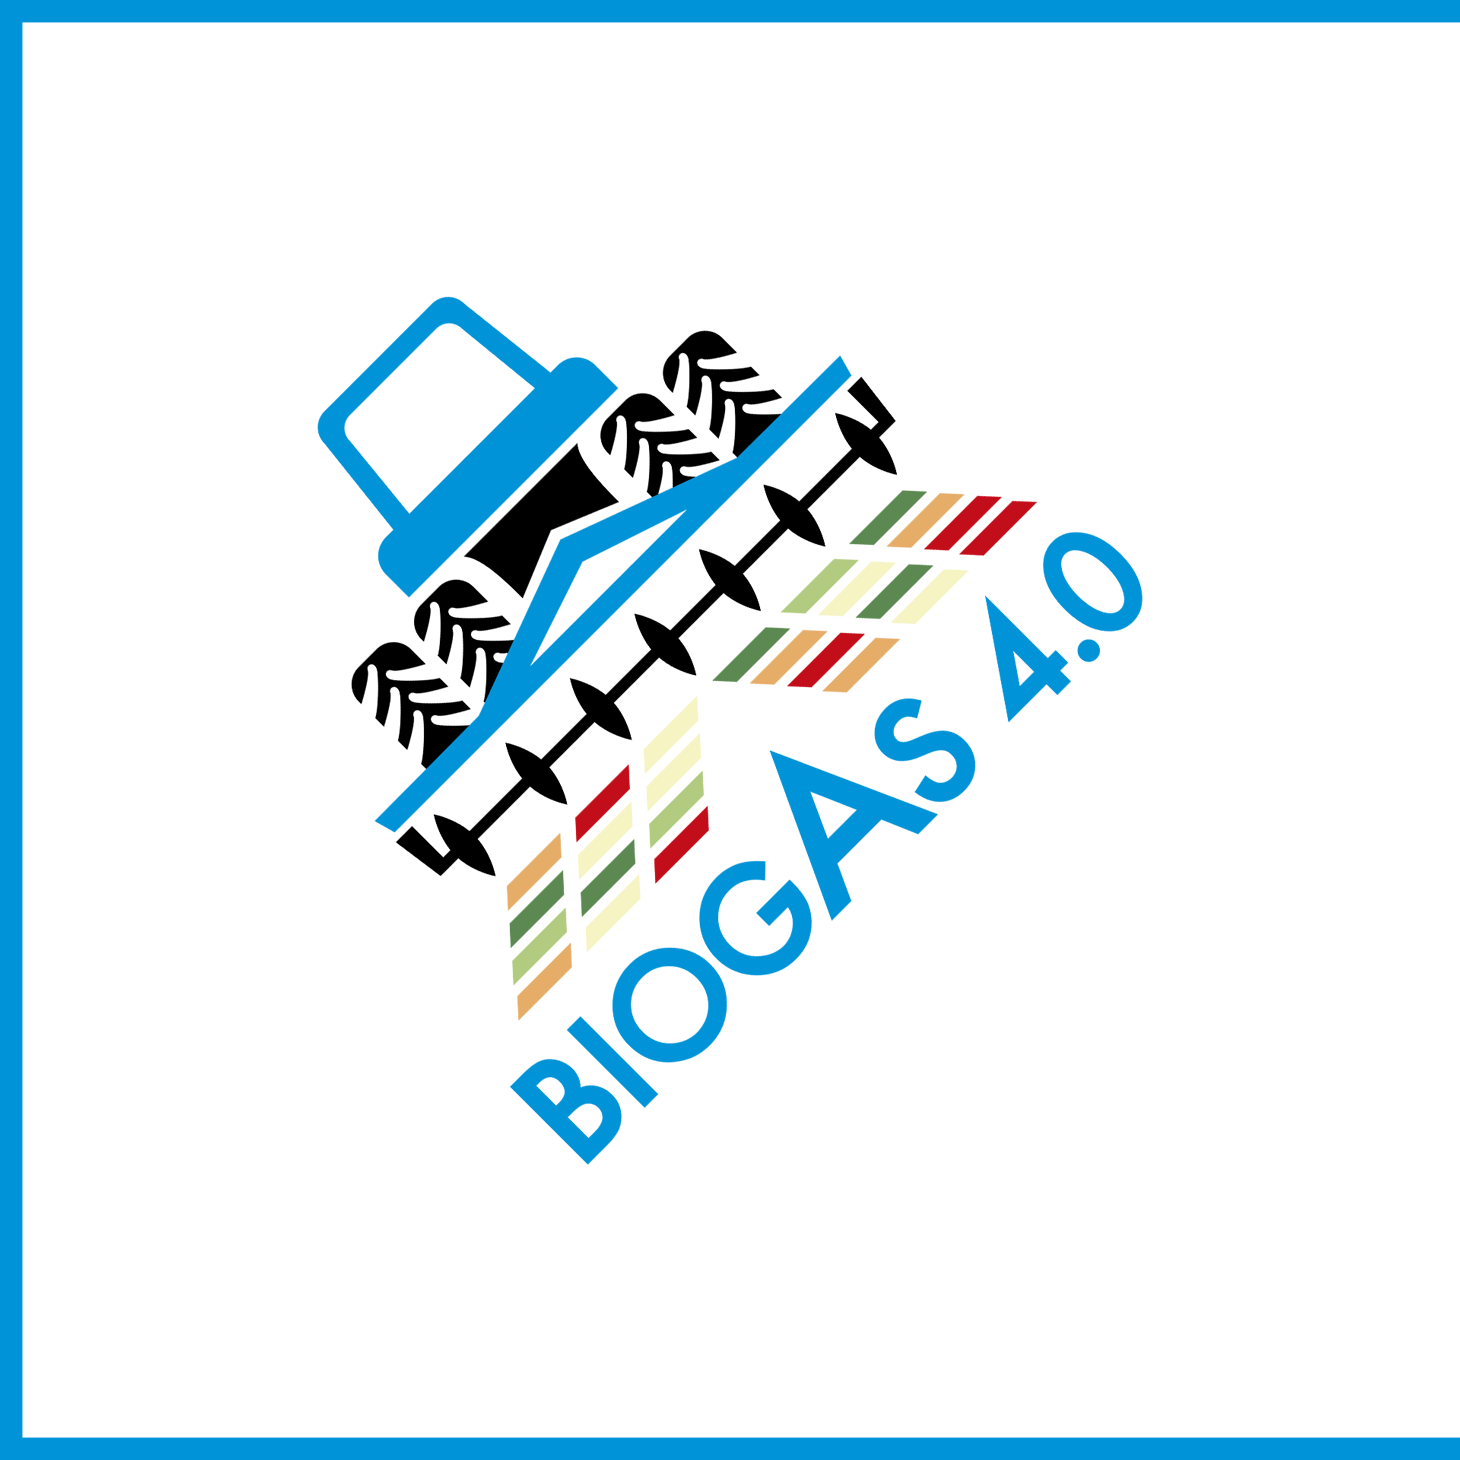 Biogas 4.0